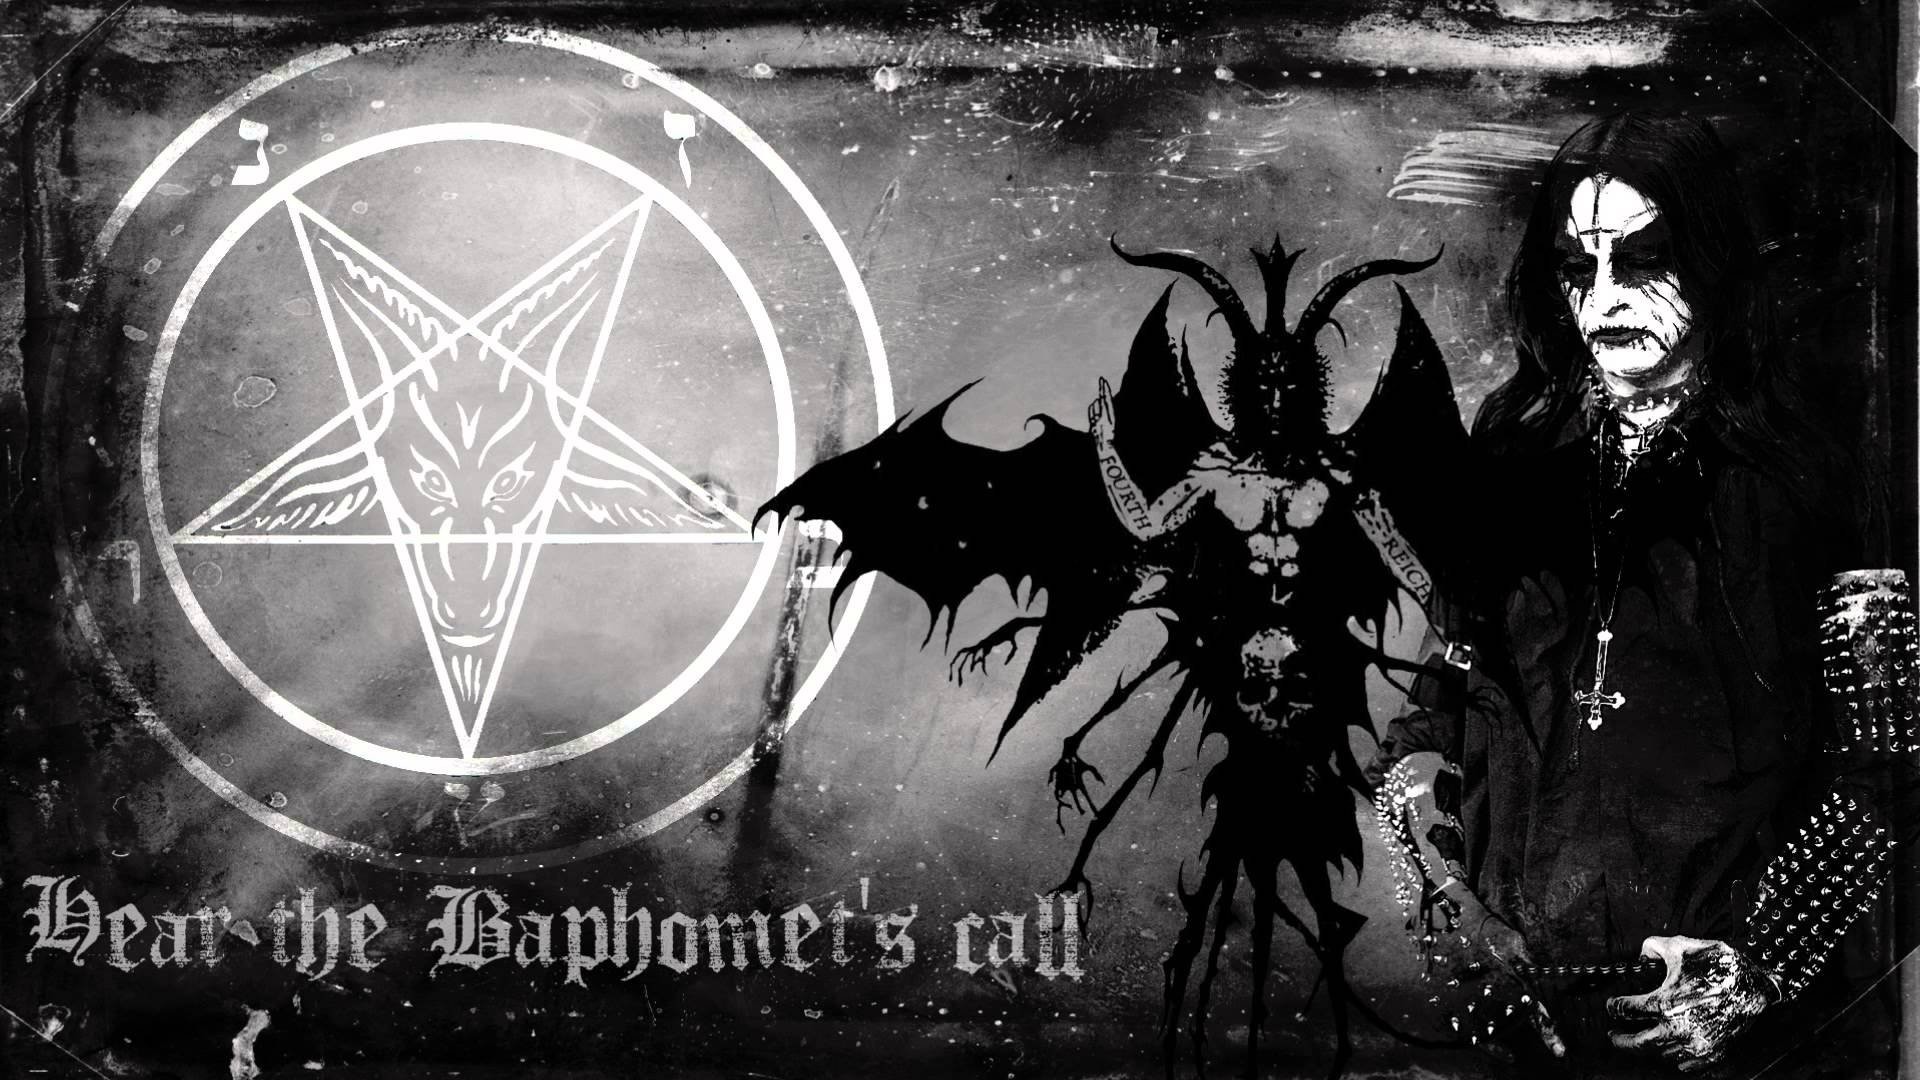 1920x1080 BEHEXEN black metal heavy poster dark occult satanic pentagram h wallpaper  |  | 329571 | WallpaperUP